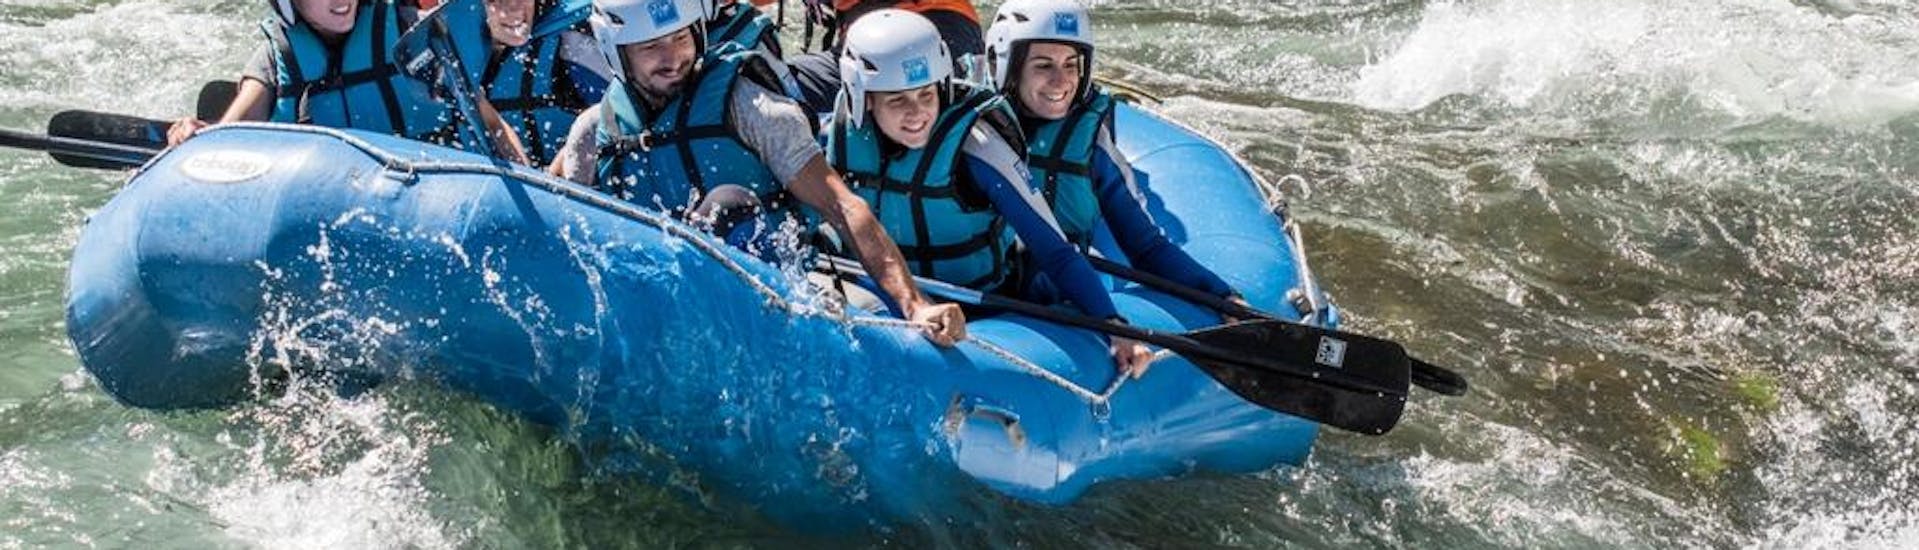 Family Rafting on the Gállego River-hero